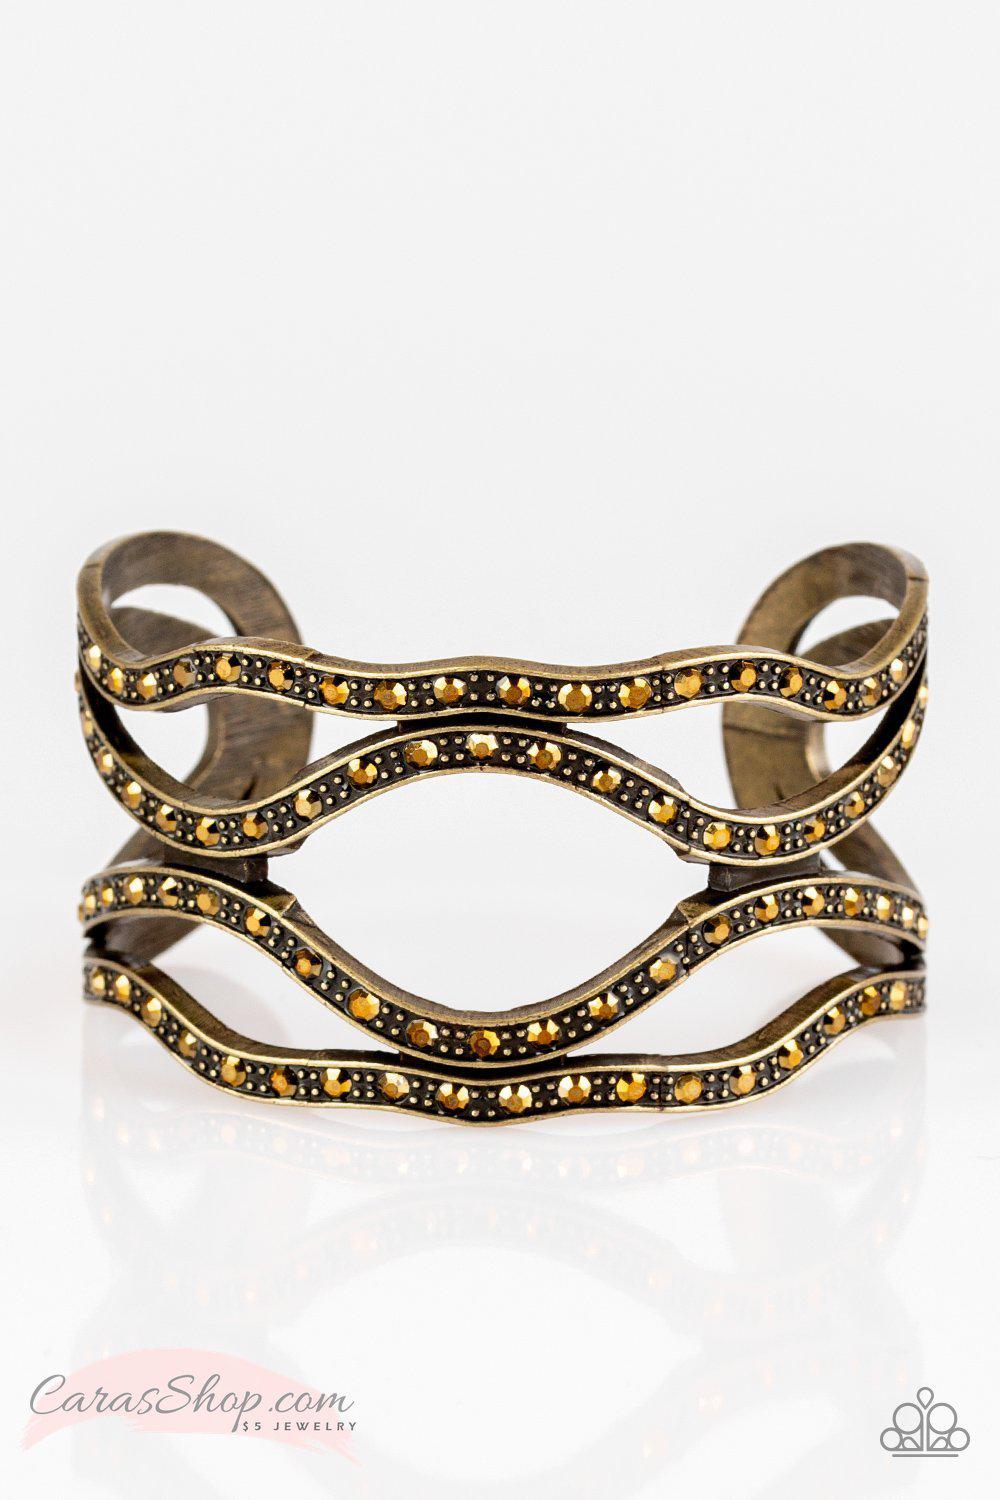 Speaks Volumes Brass Cuff Bracelet - Paparazzi Accessories-CarasShop.com - $5 Jewelry by Cara Jewels